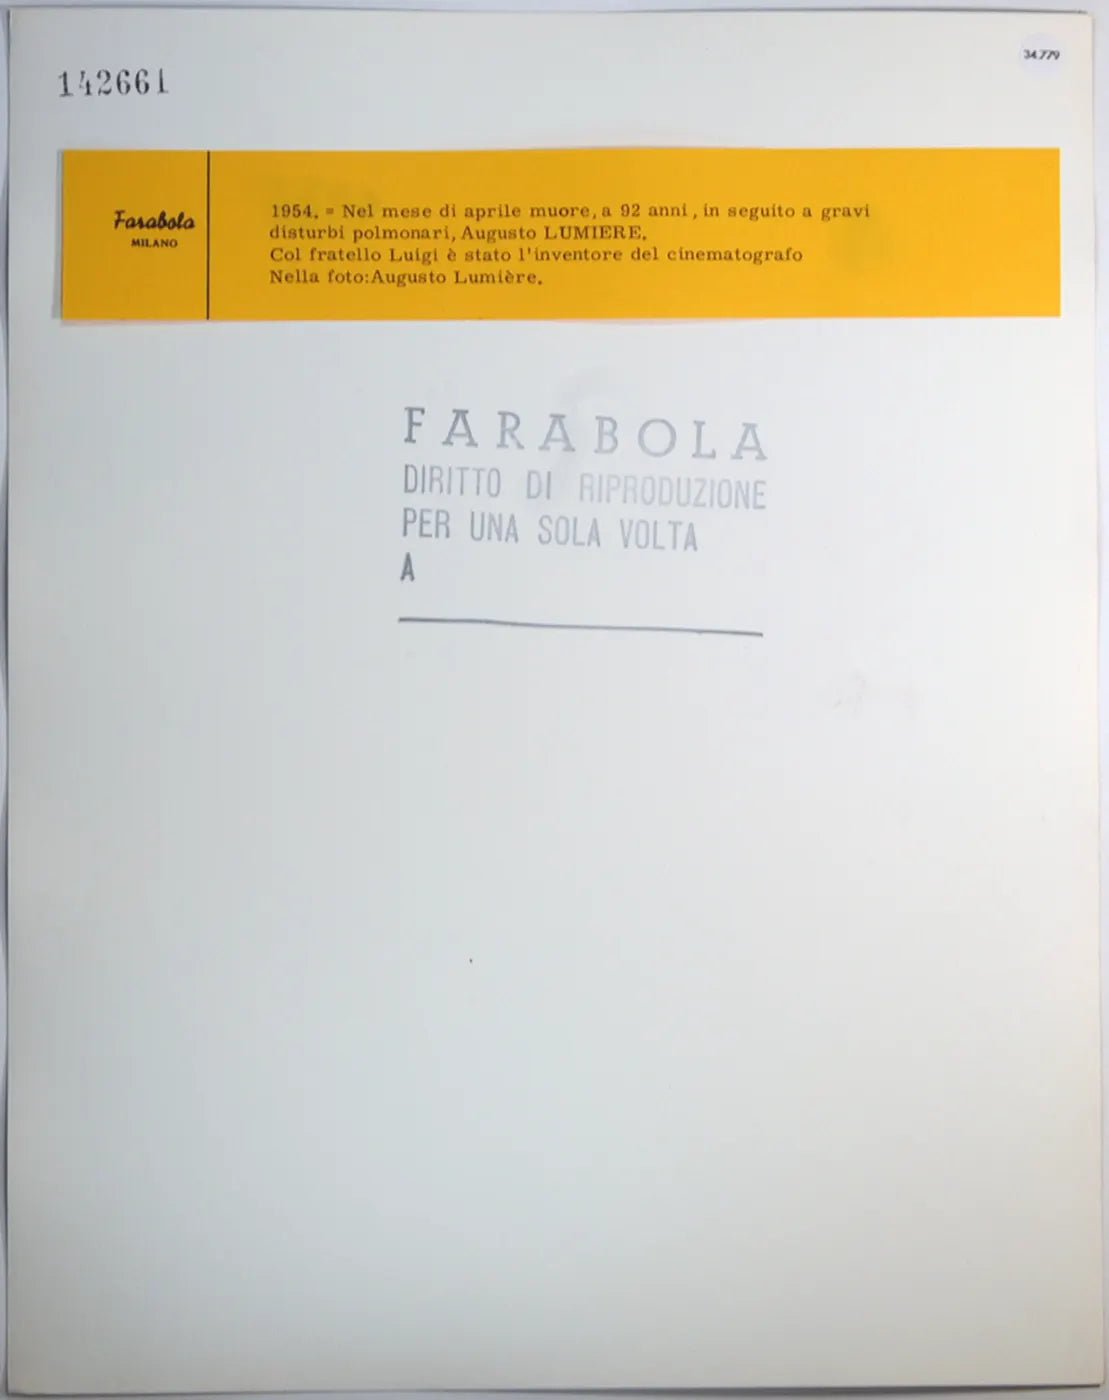 August Lumière inventore Ft 34779 - Stampa 30x24 cm - Farabola Stampa ai sali d'argento